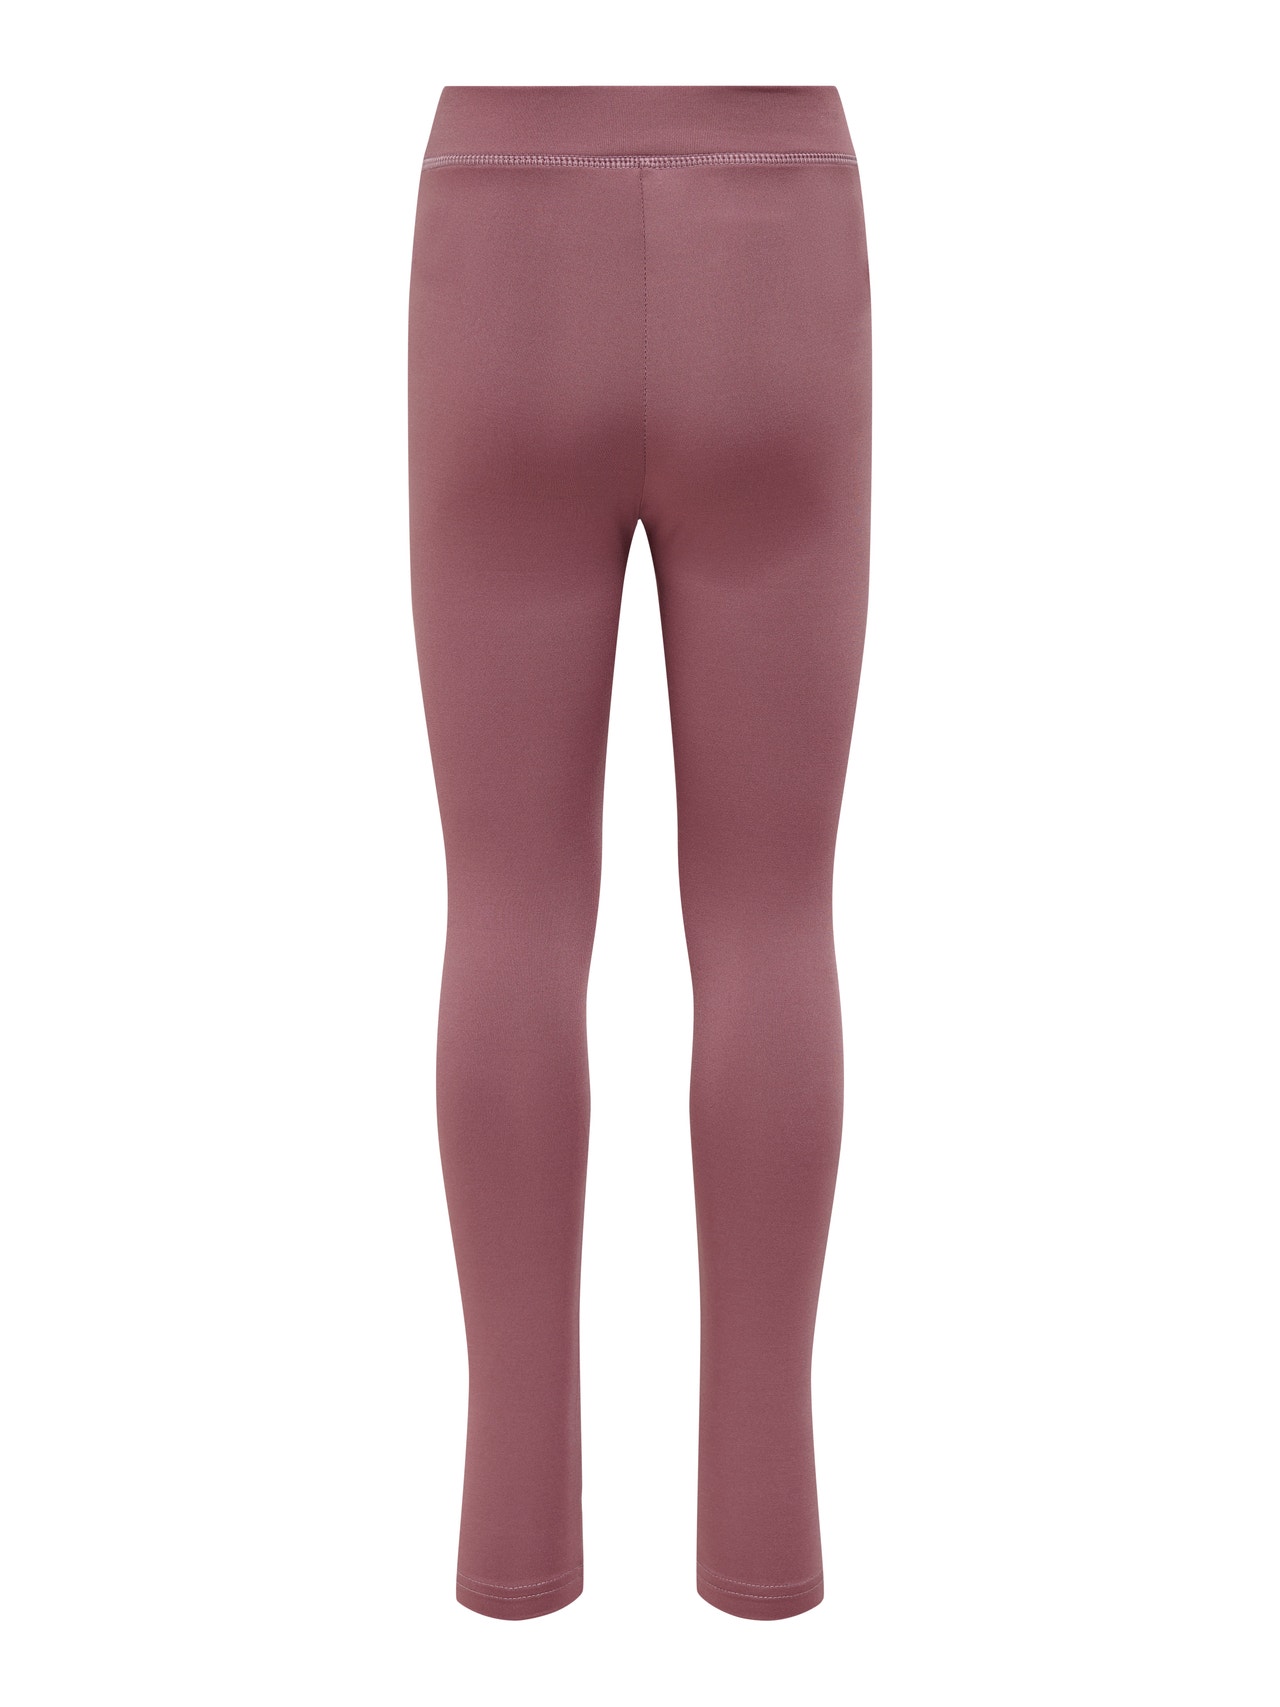 Solid burgundy colored leggings for women